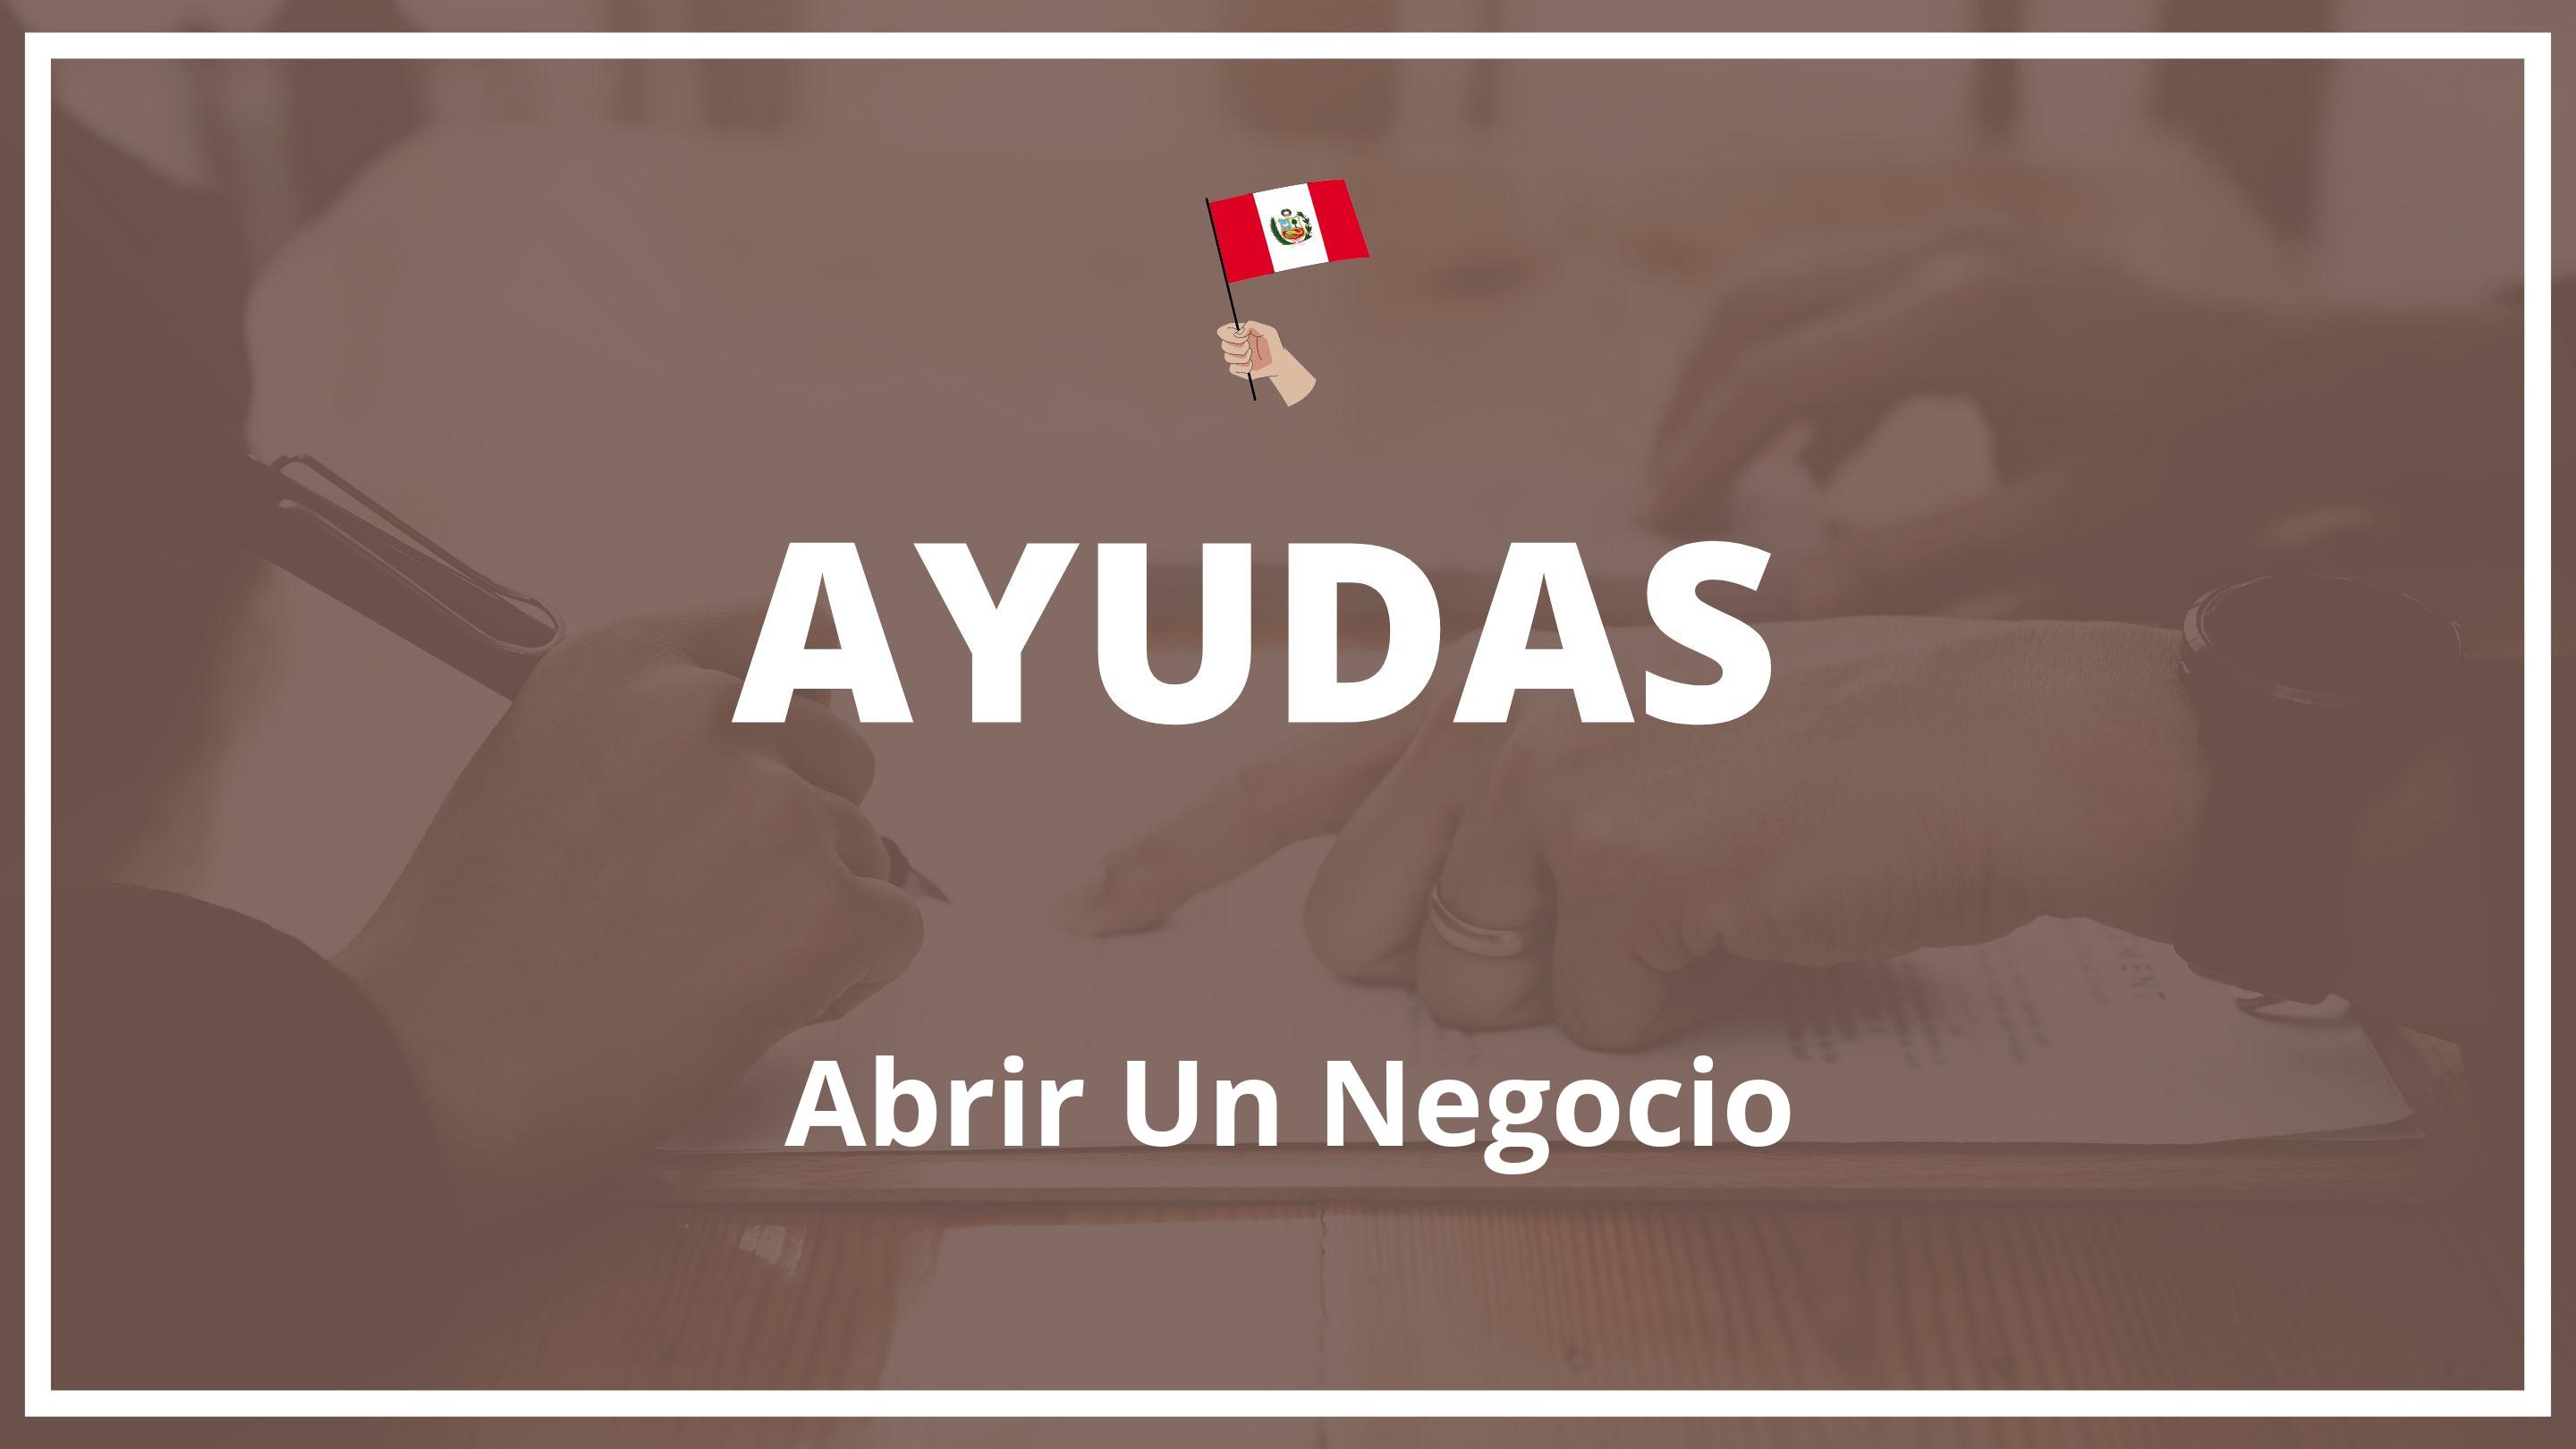 Ayudas para abrir un negocio Peru